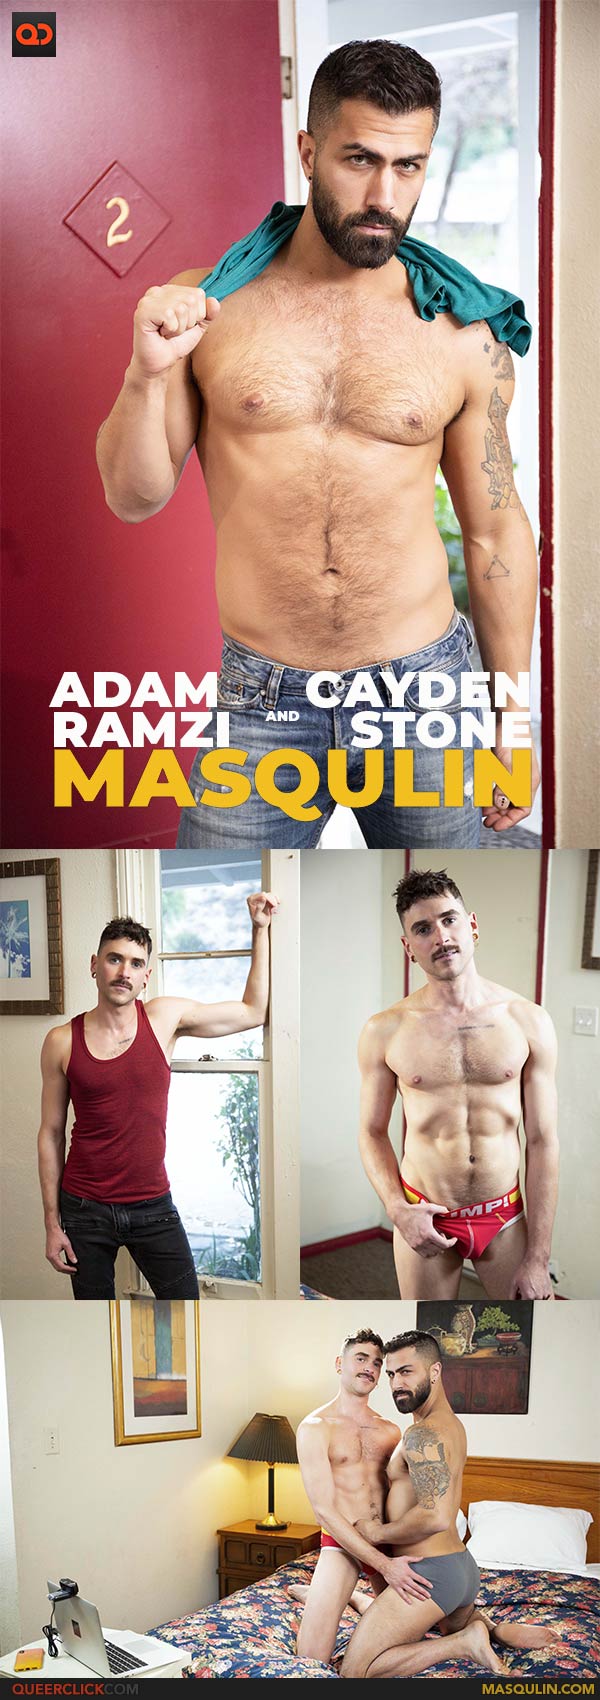 Masqulin: Adam Ramzi and Cayden Stone